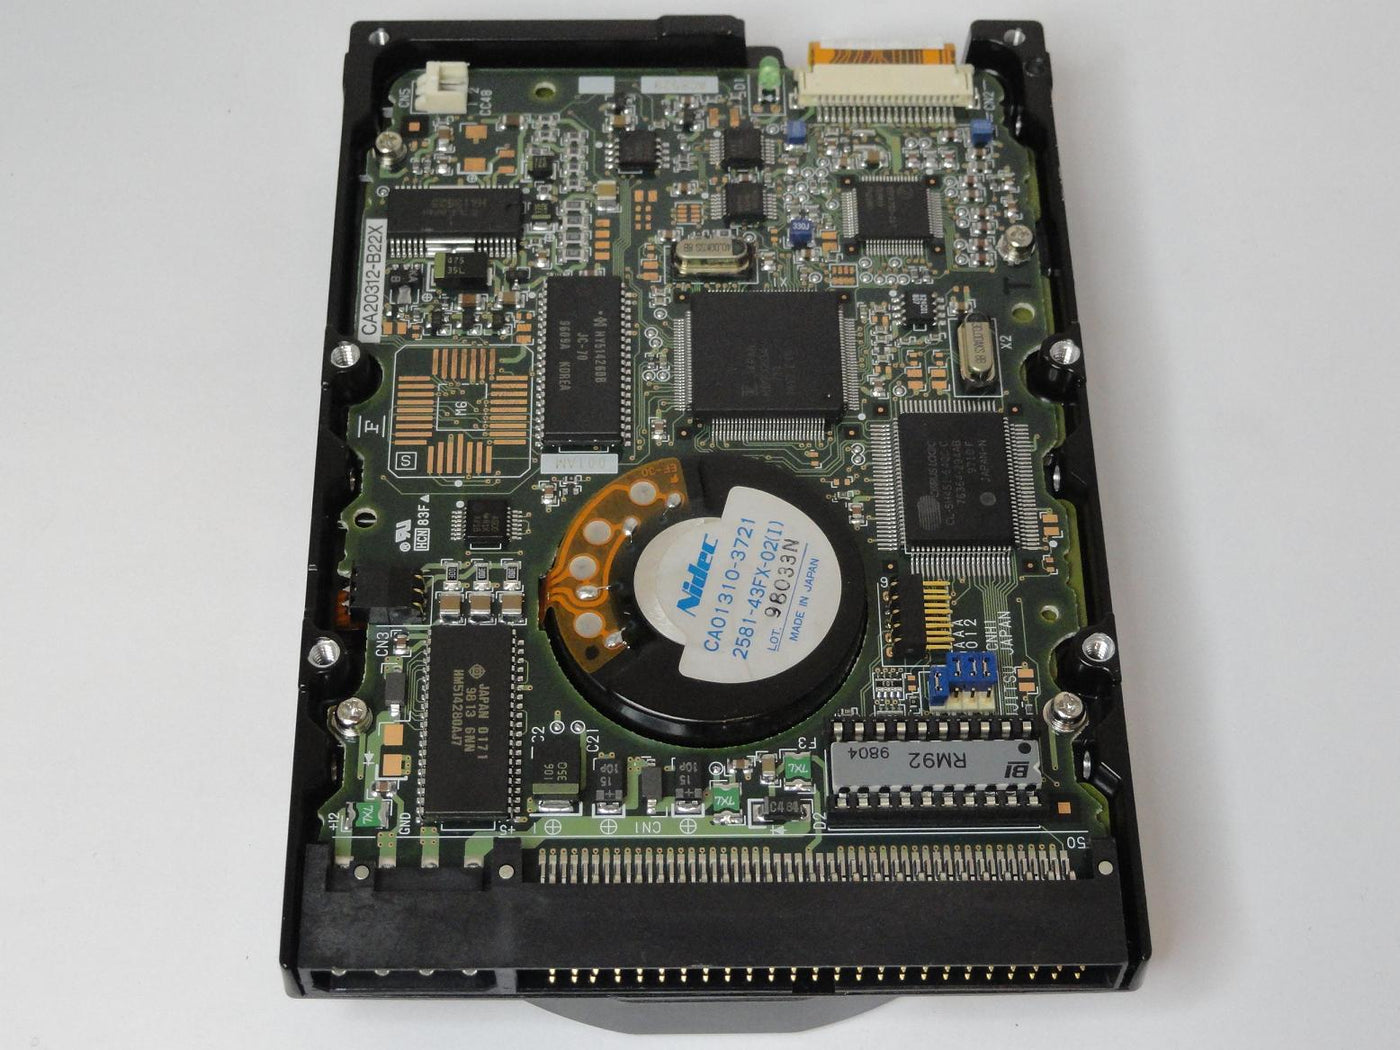 MC2757_CA01310-B161_Fujitsu 1GB SCSI 50 Pin 5400rpm 3.5in HDD - Image2